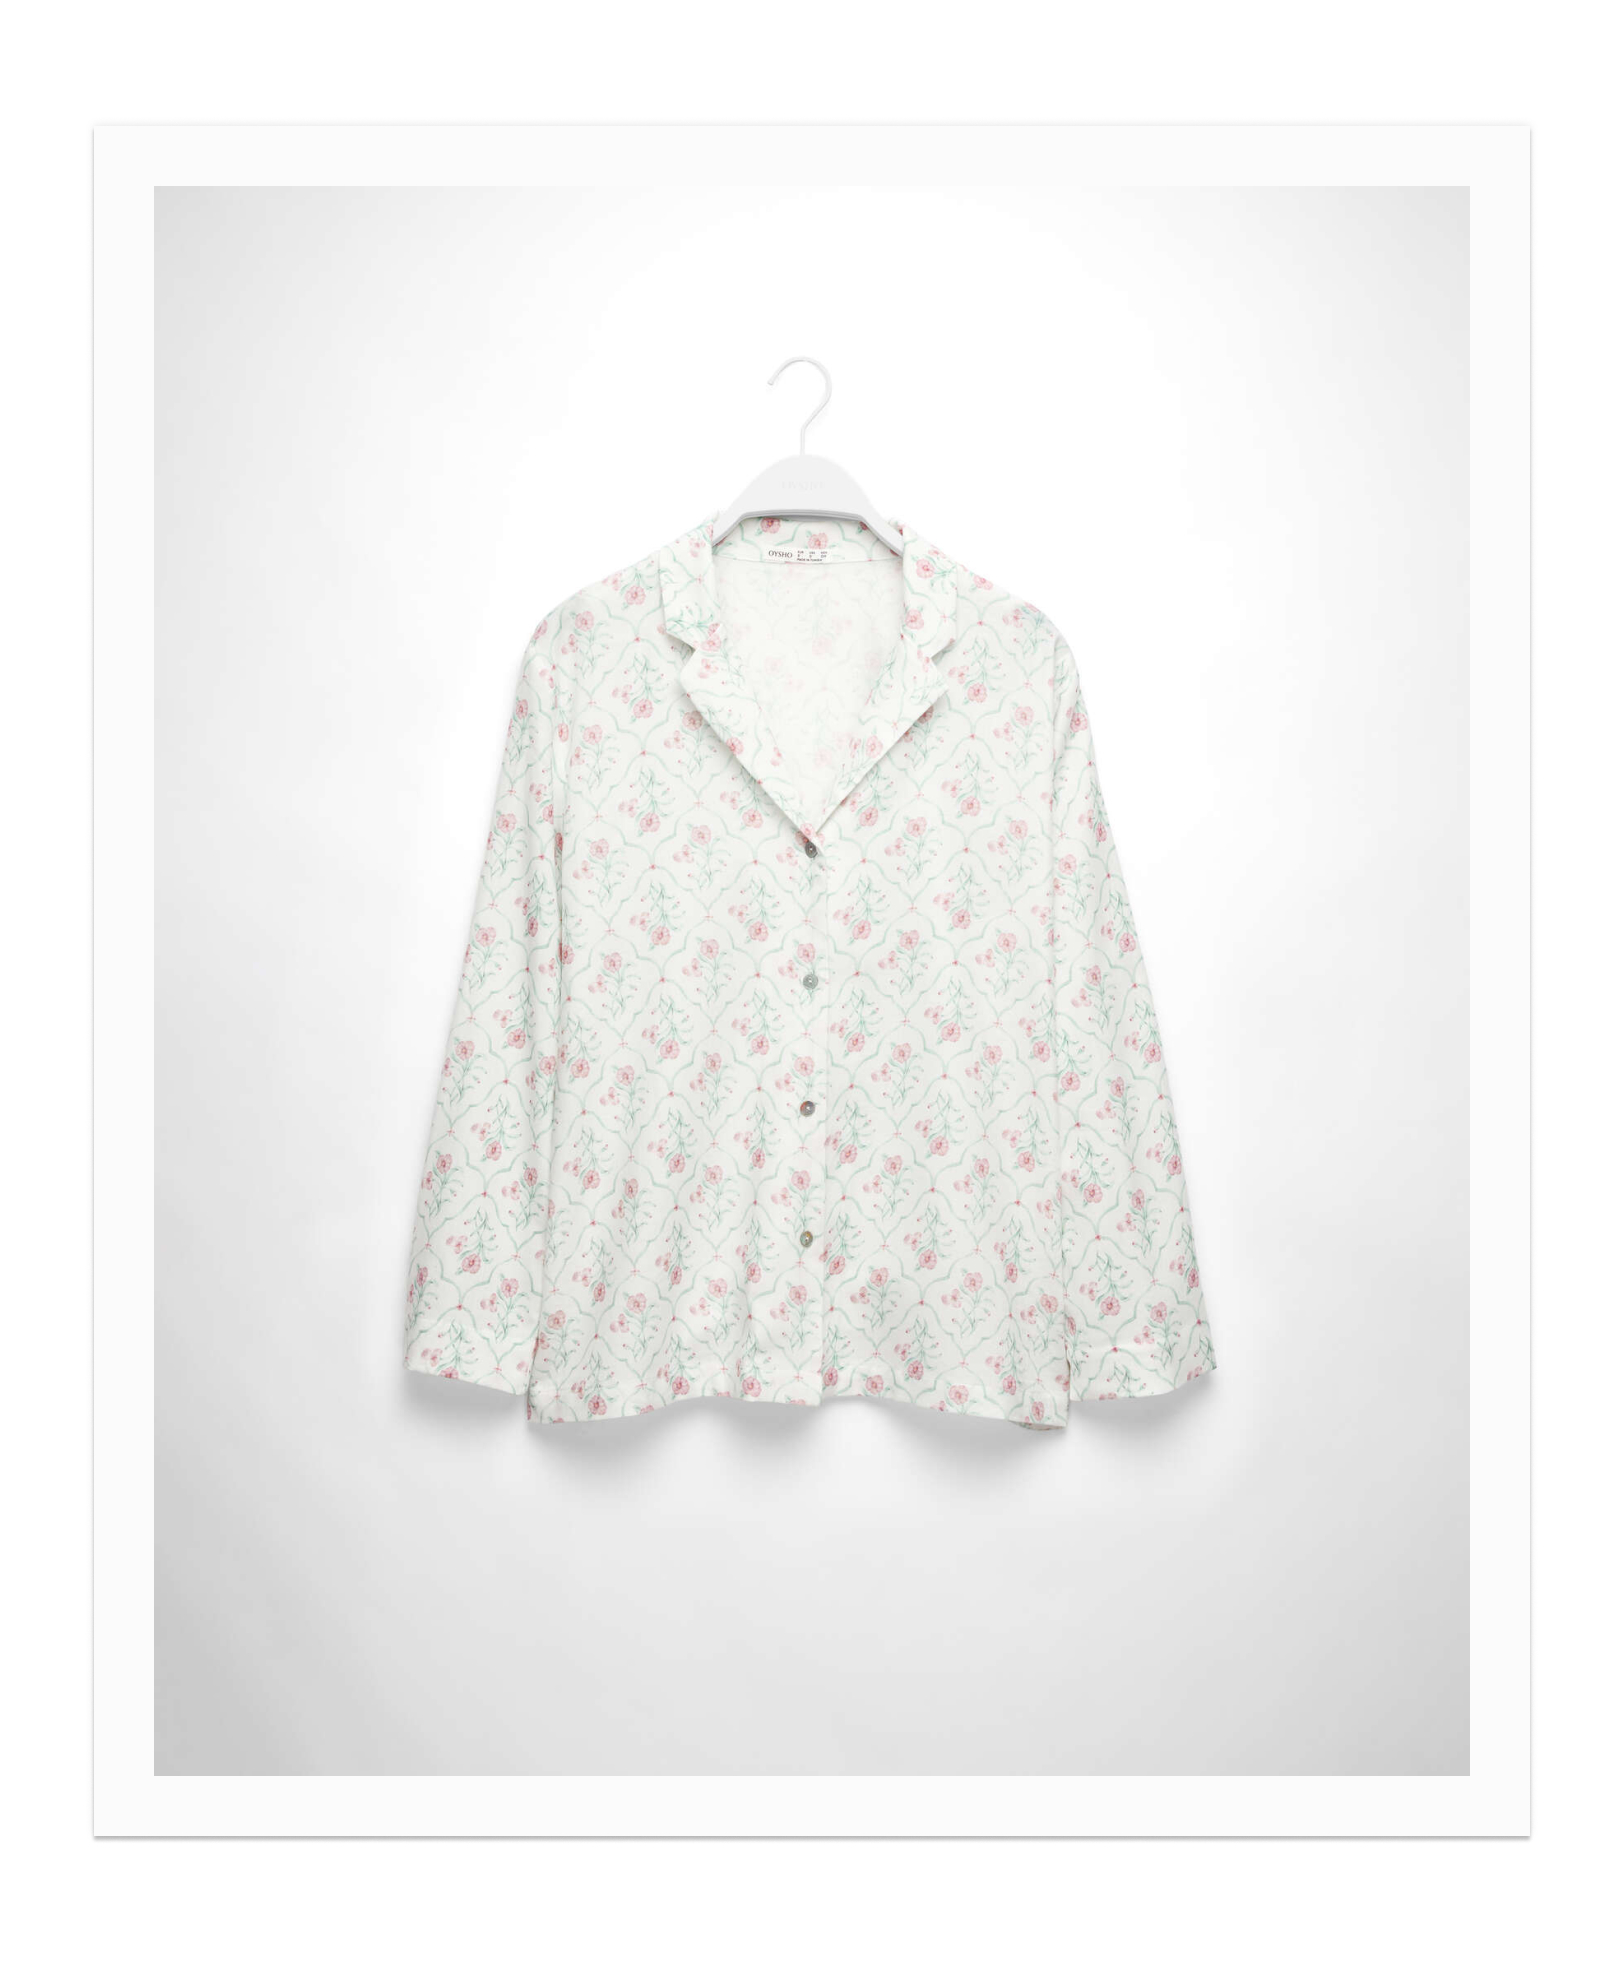 Floral print long-sleeved shirt